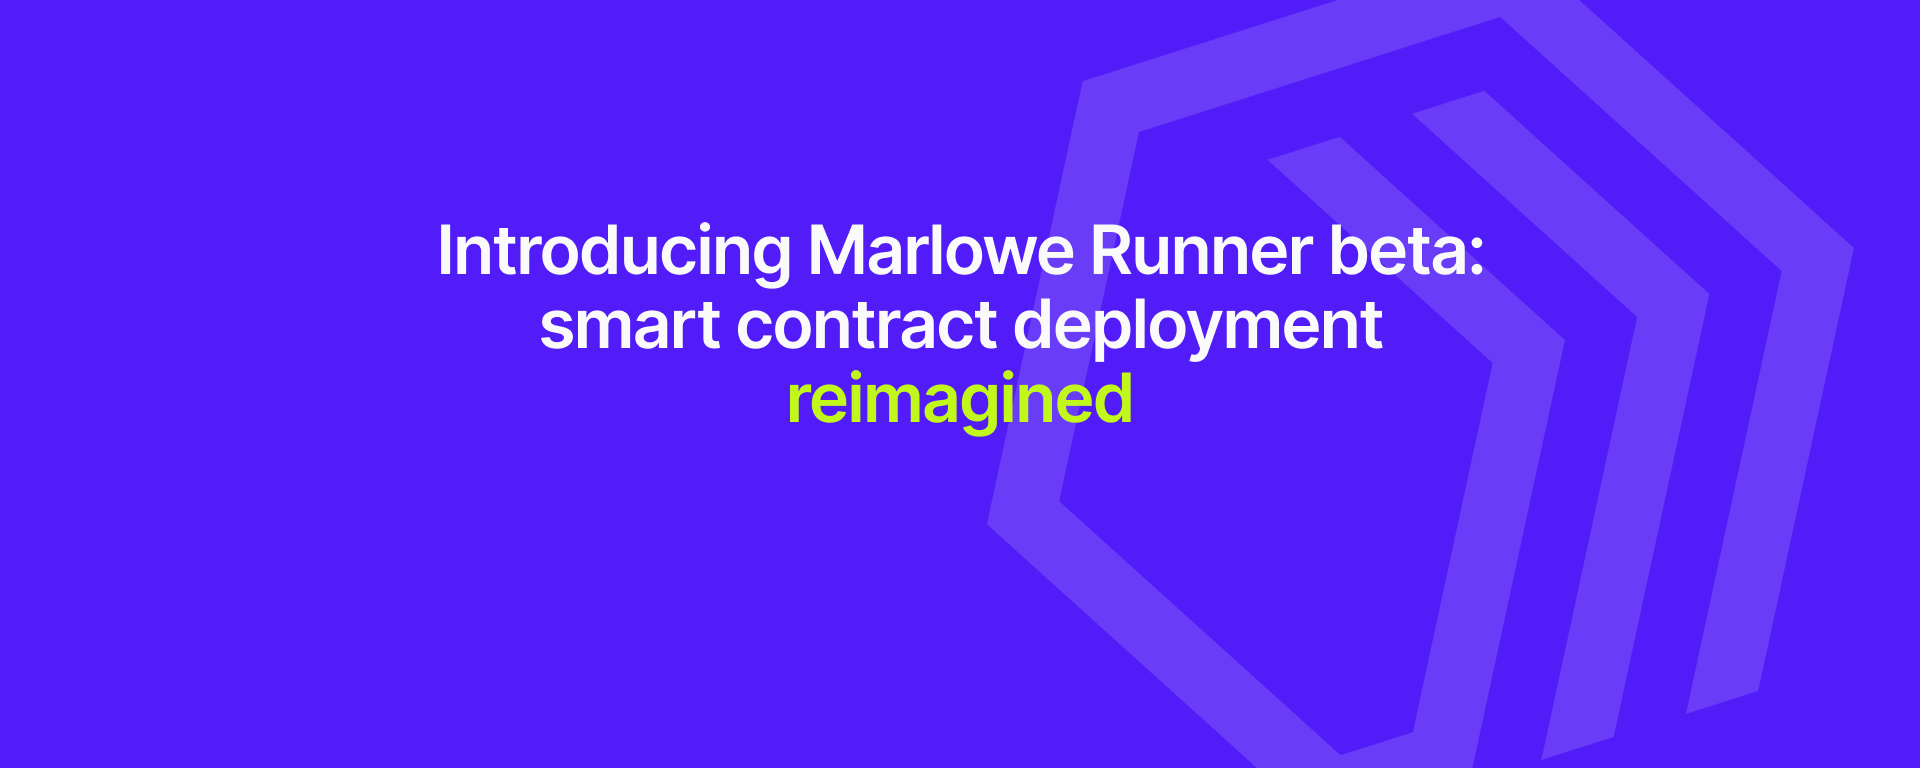 Introducing Marlowe Runner beta: smart contract deployment reimagined